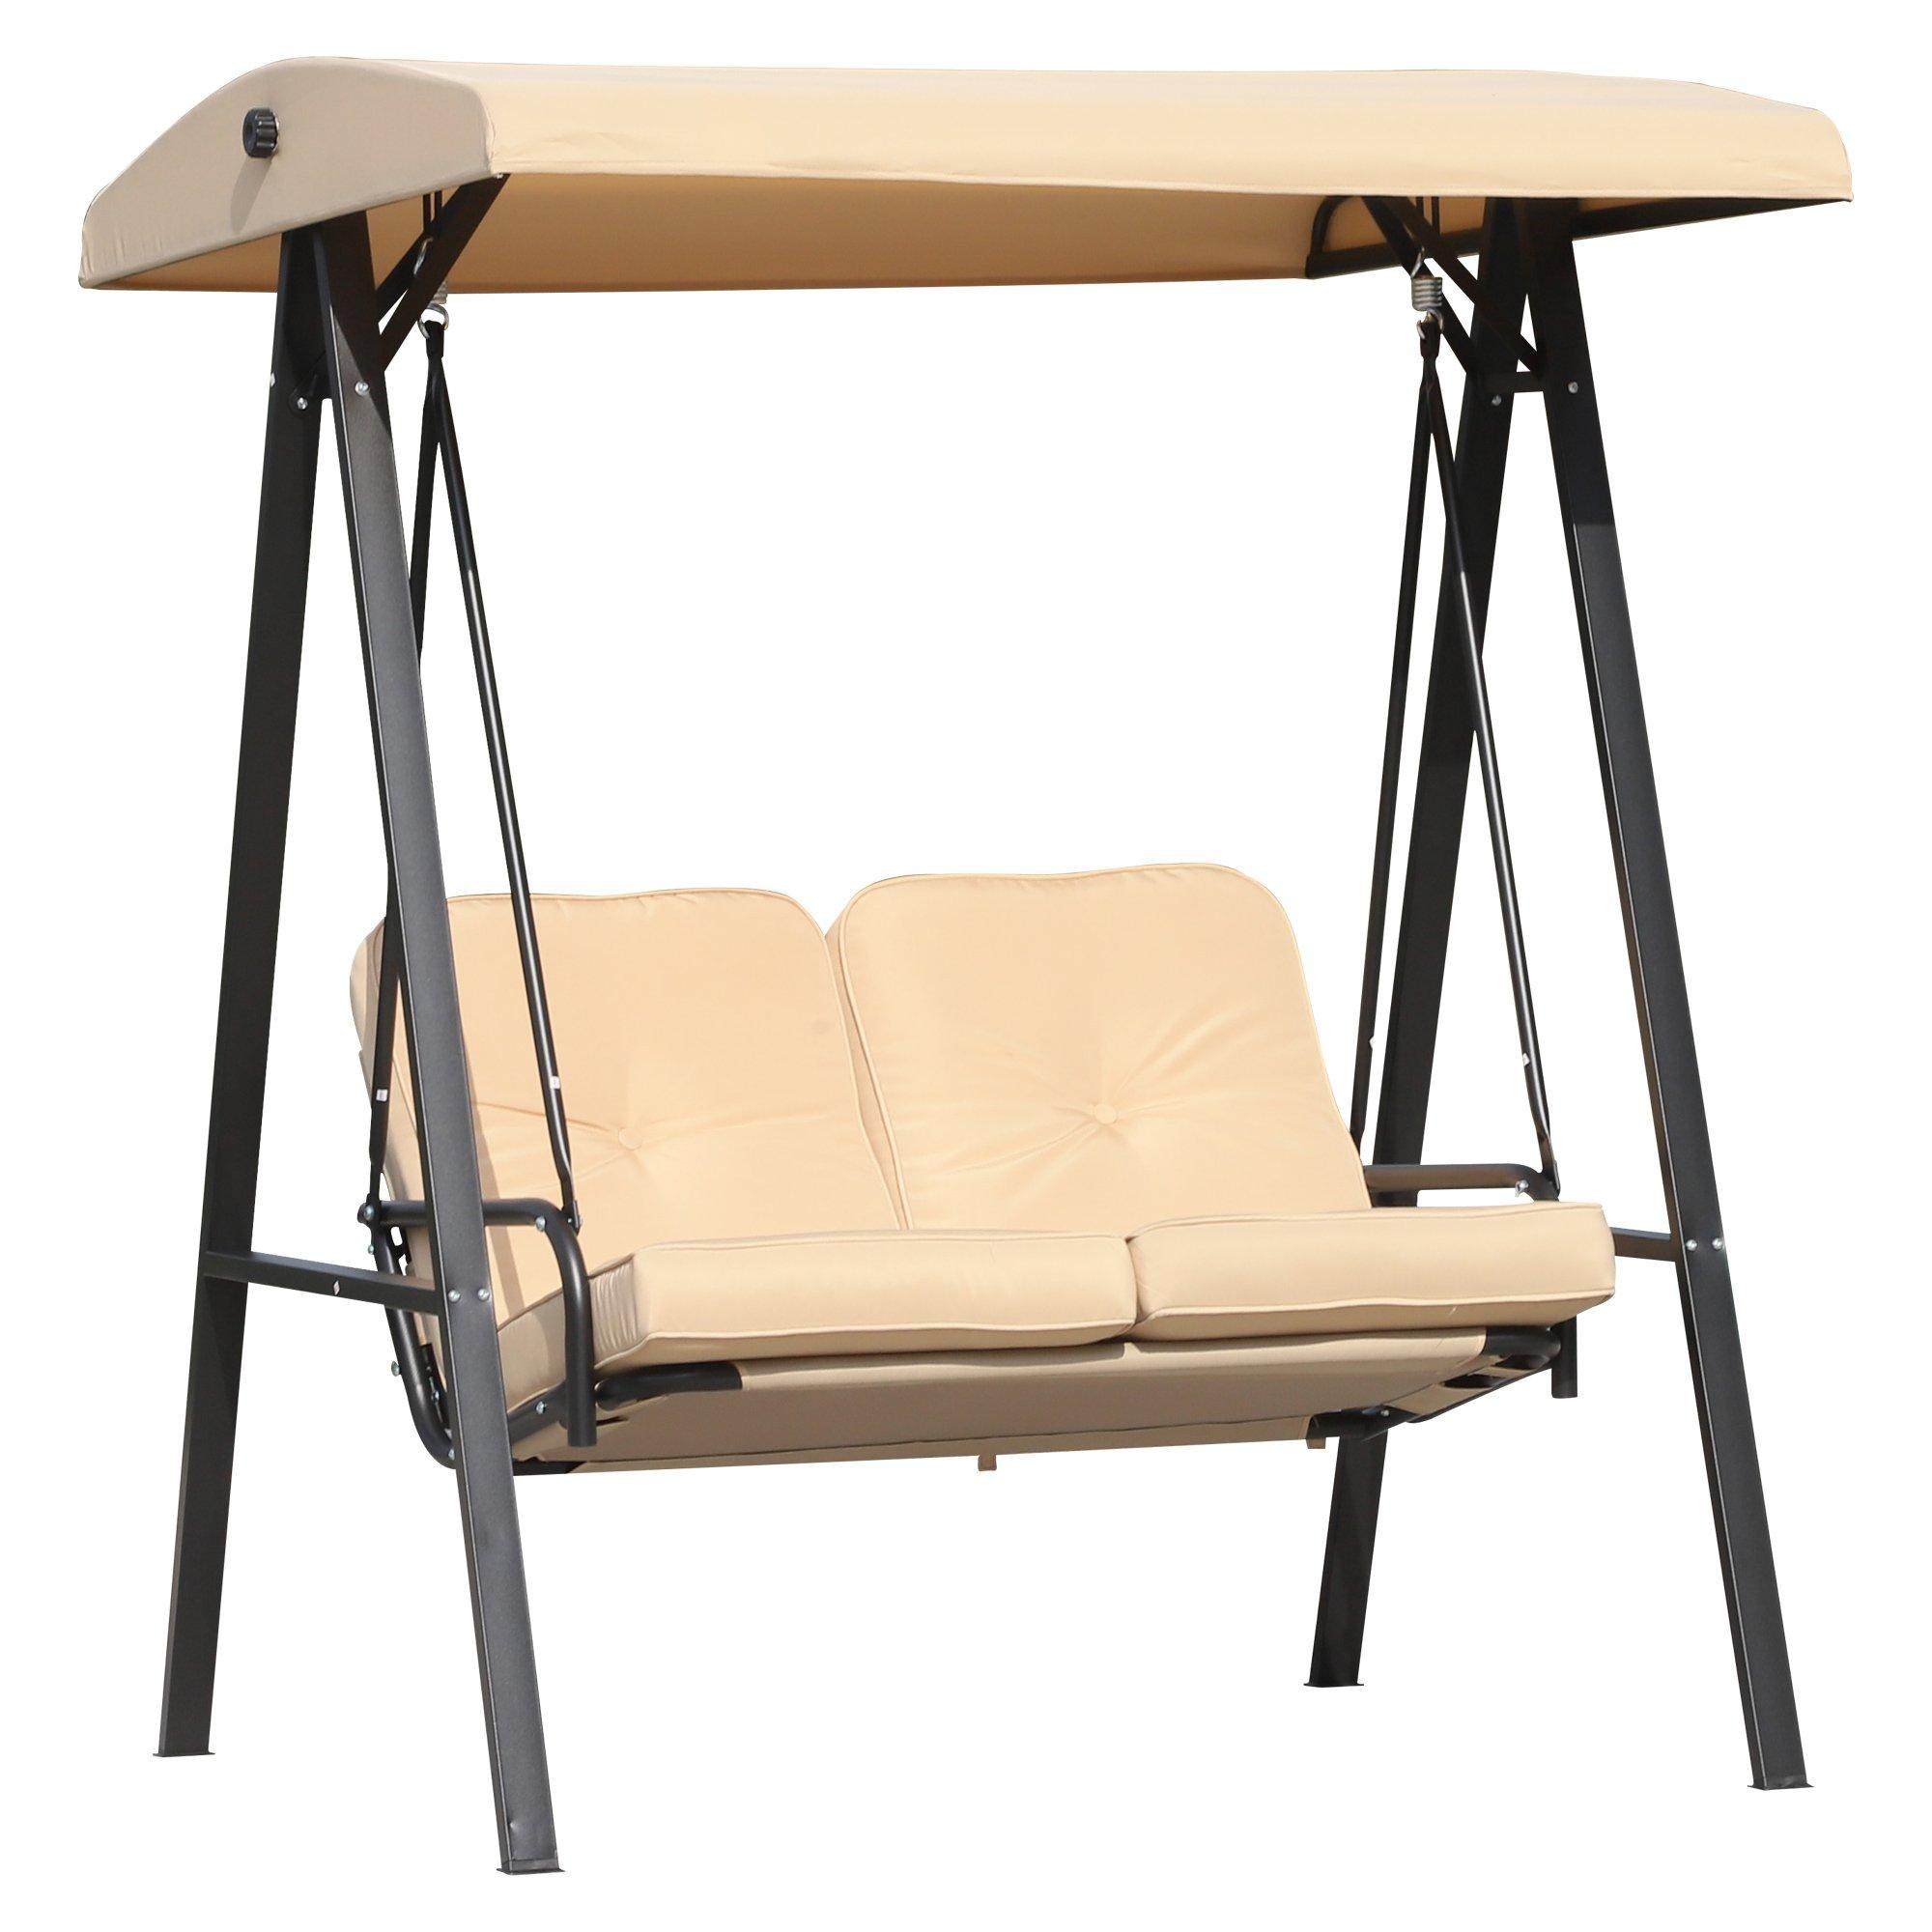 2 Seater Garden Outdoor Swing Chair Hammock with Steel Frame